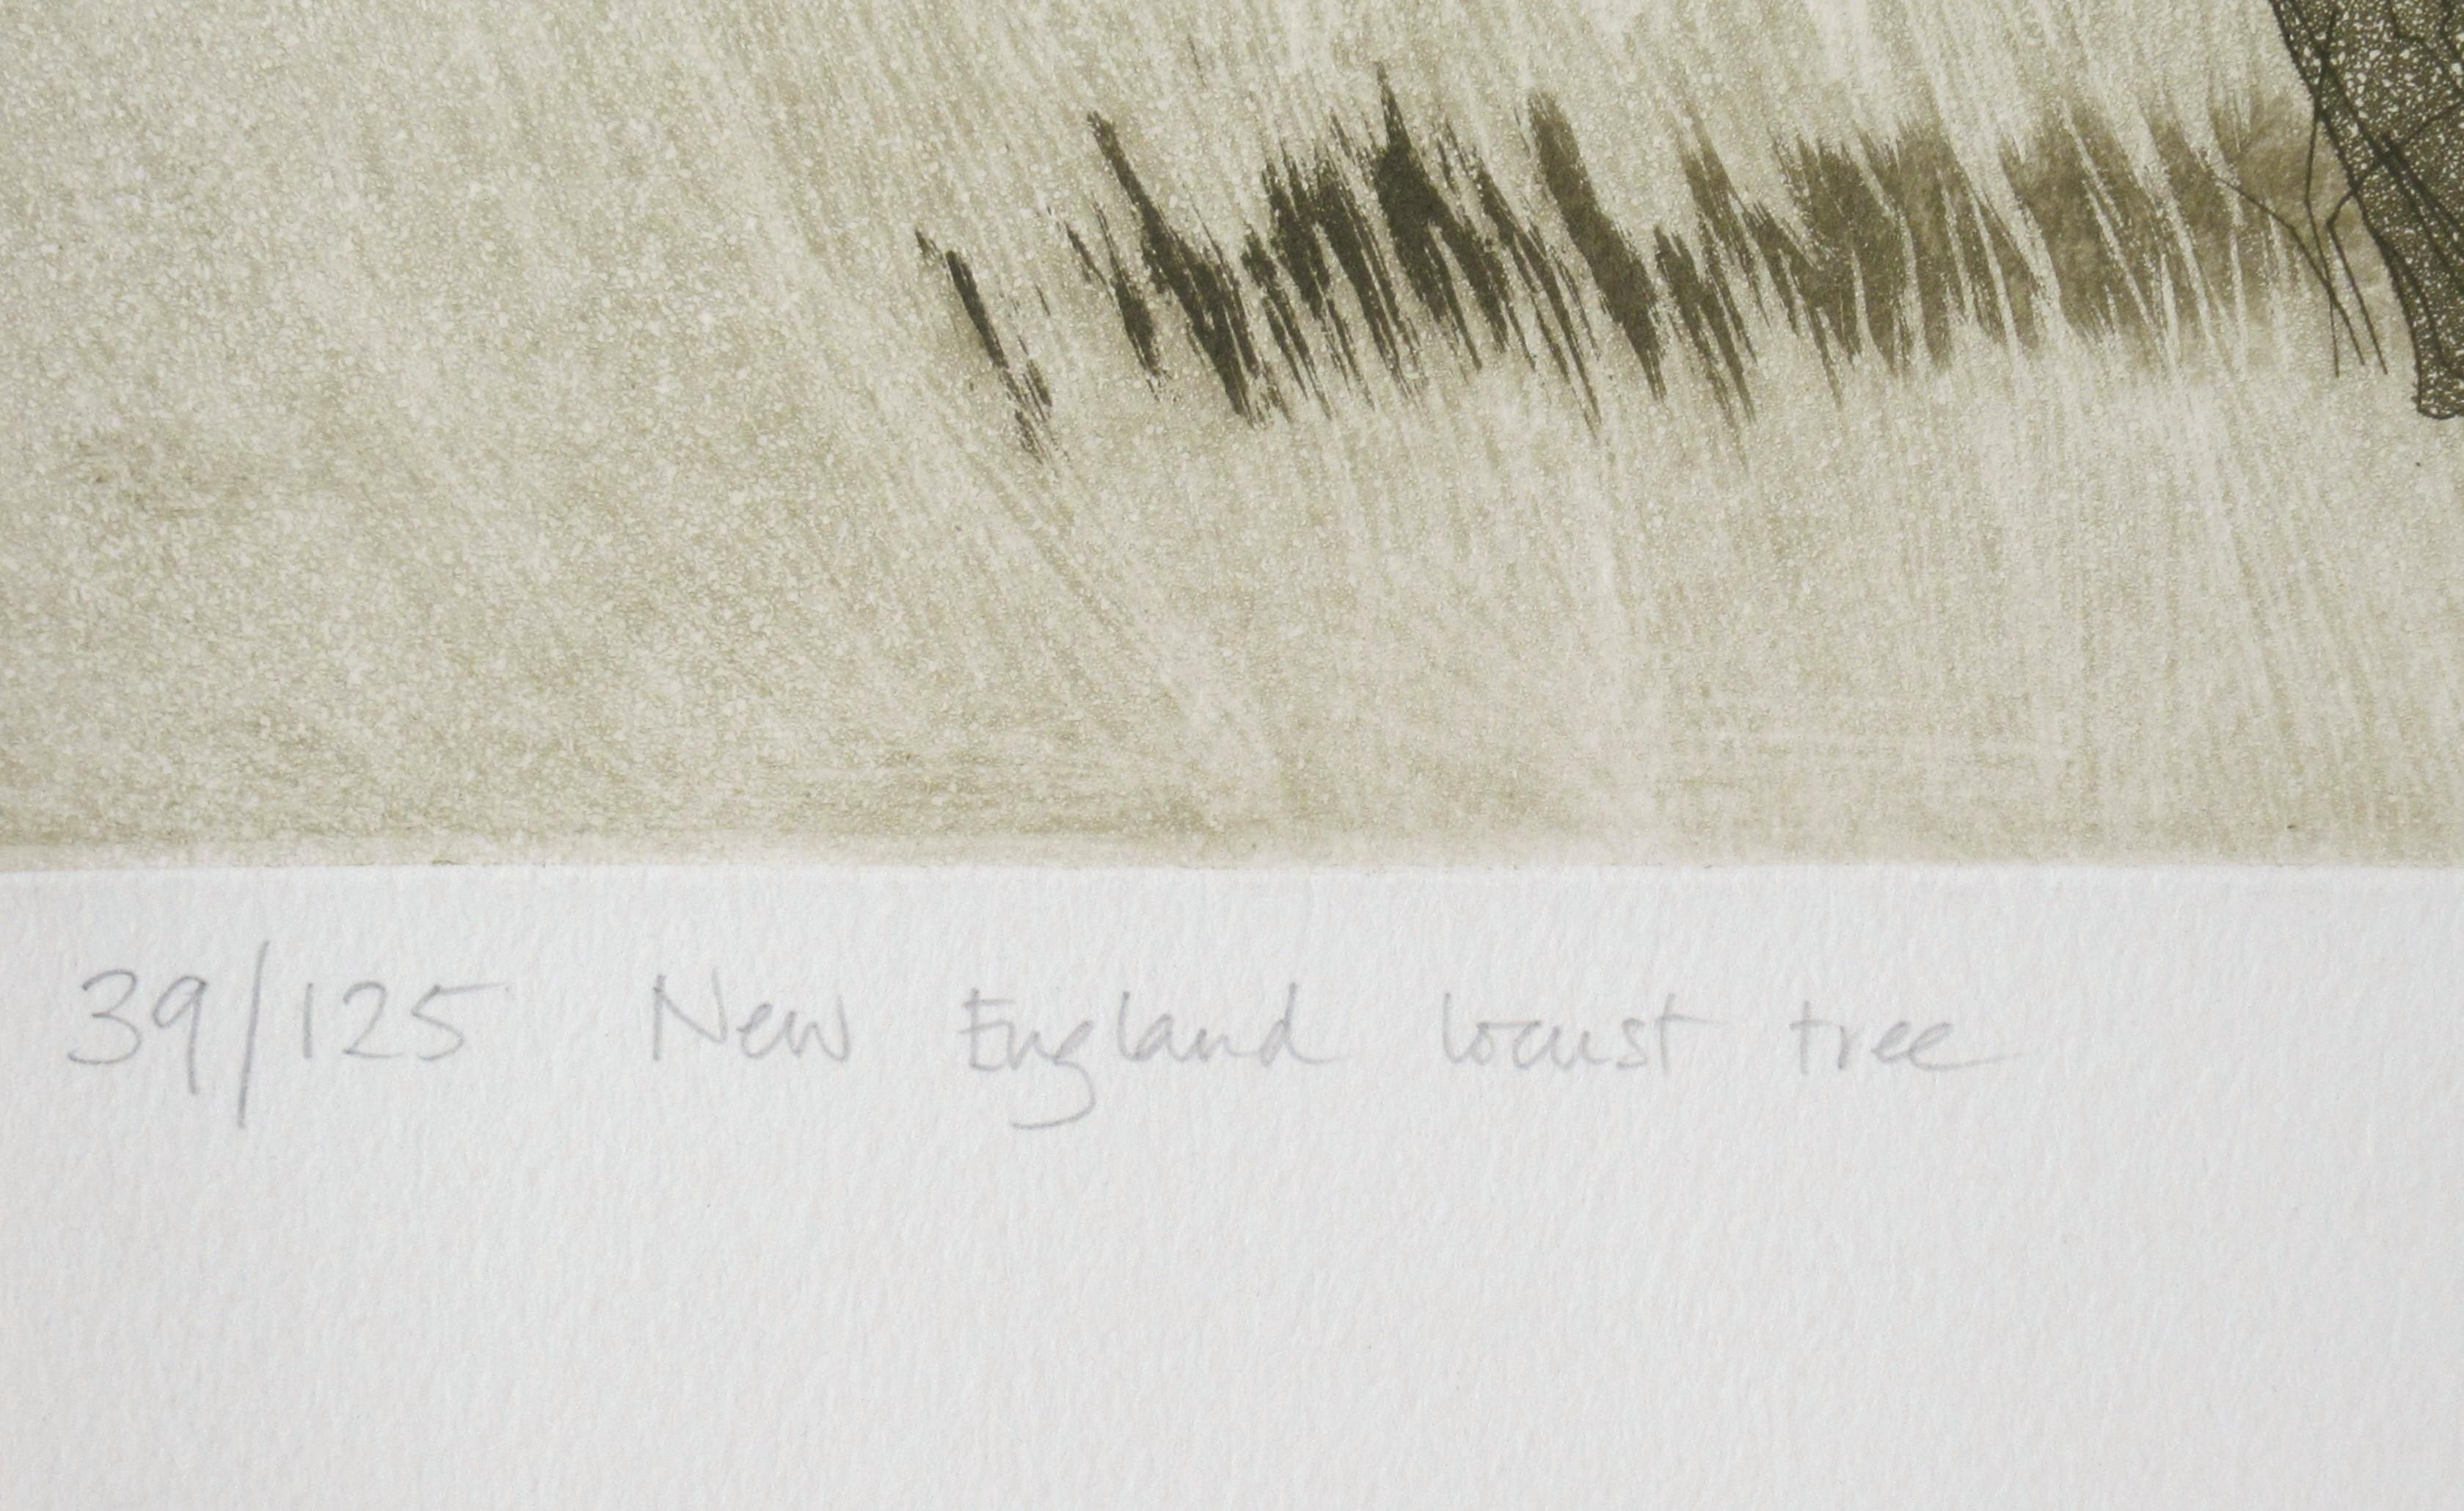 New England Locust Tree - Modern Print by Tessa Beaver